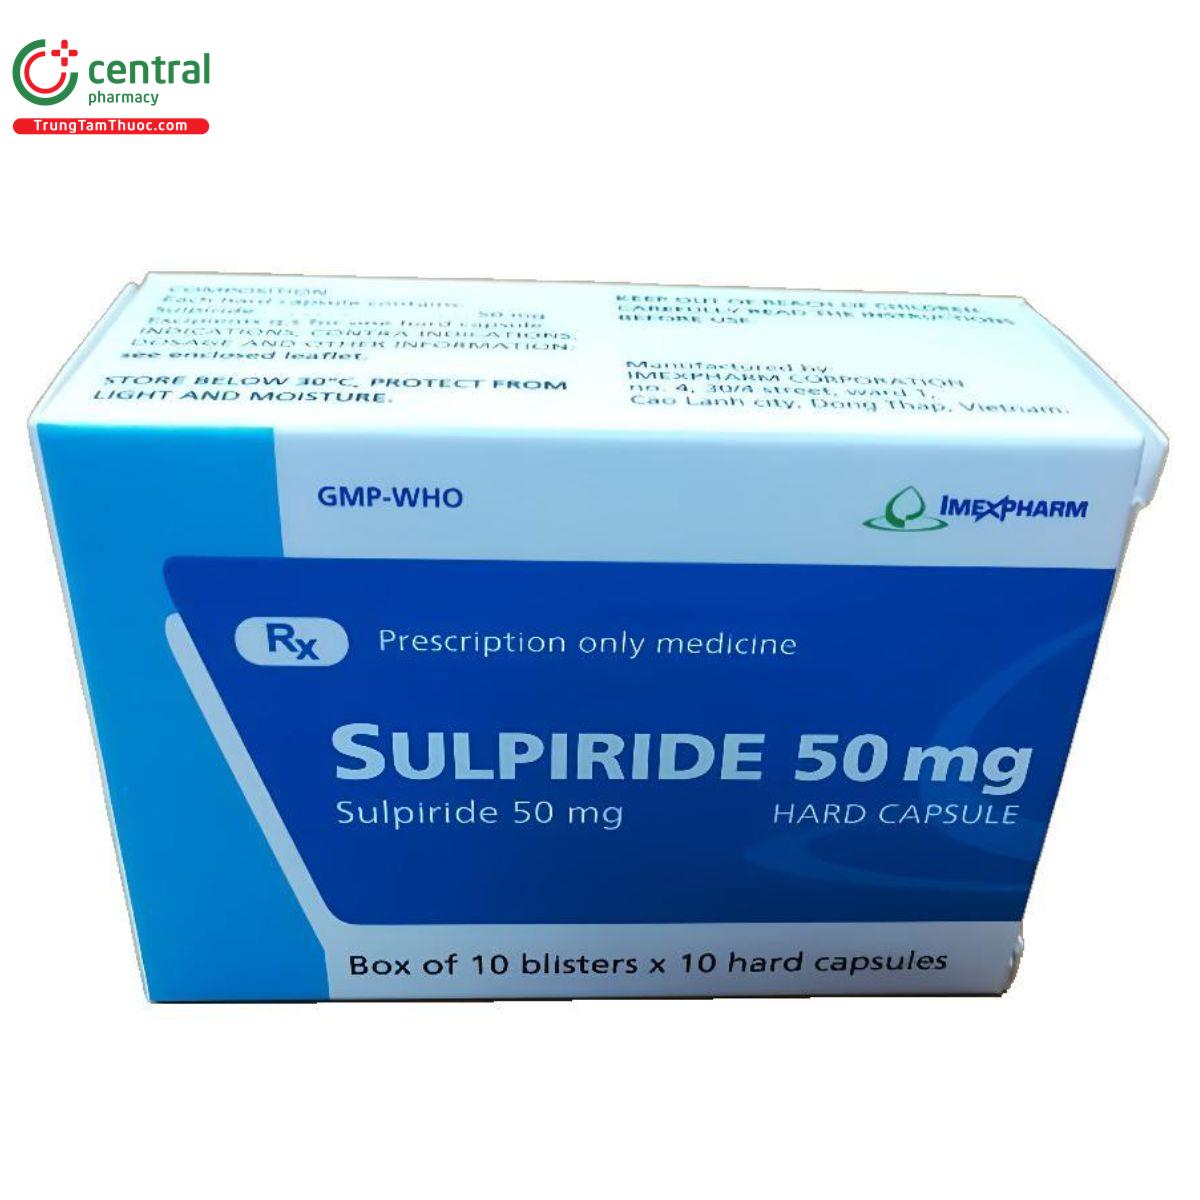 thuoc sulpiride 50mg imexpharm 3 T7275